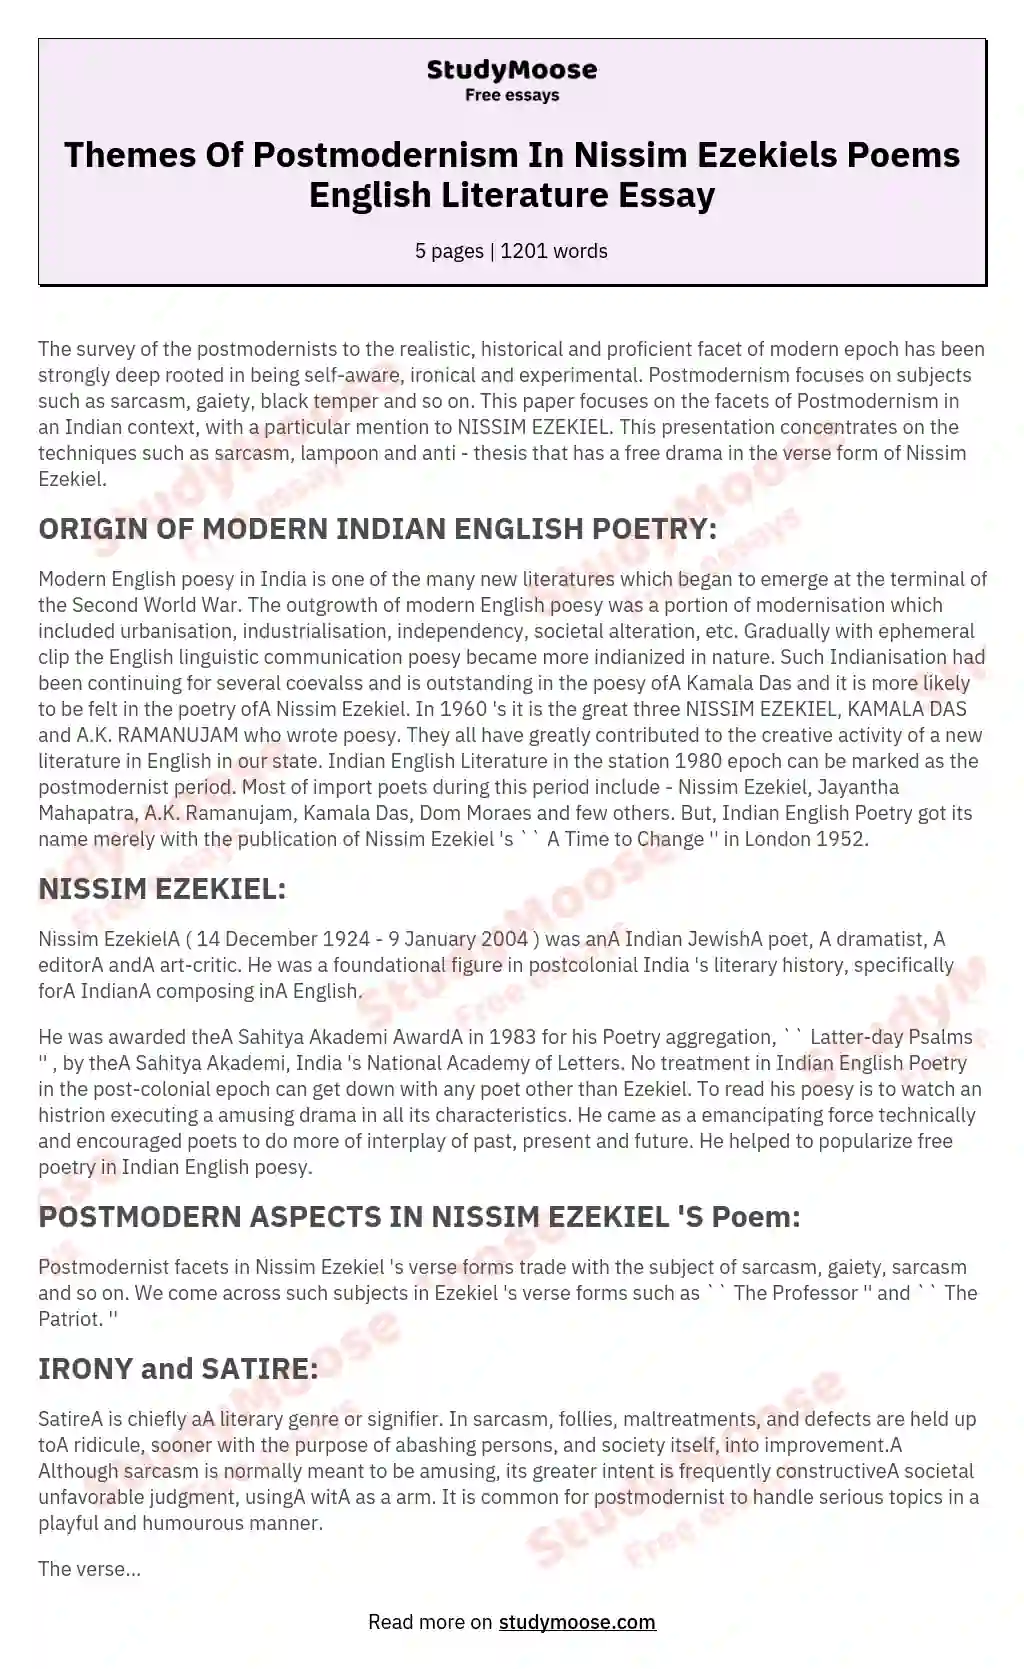 Themes Of Postmodernism In Nissim Ezekiels Poems English Literature Essay essay